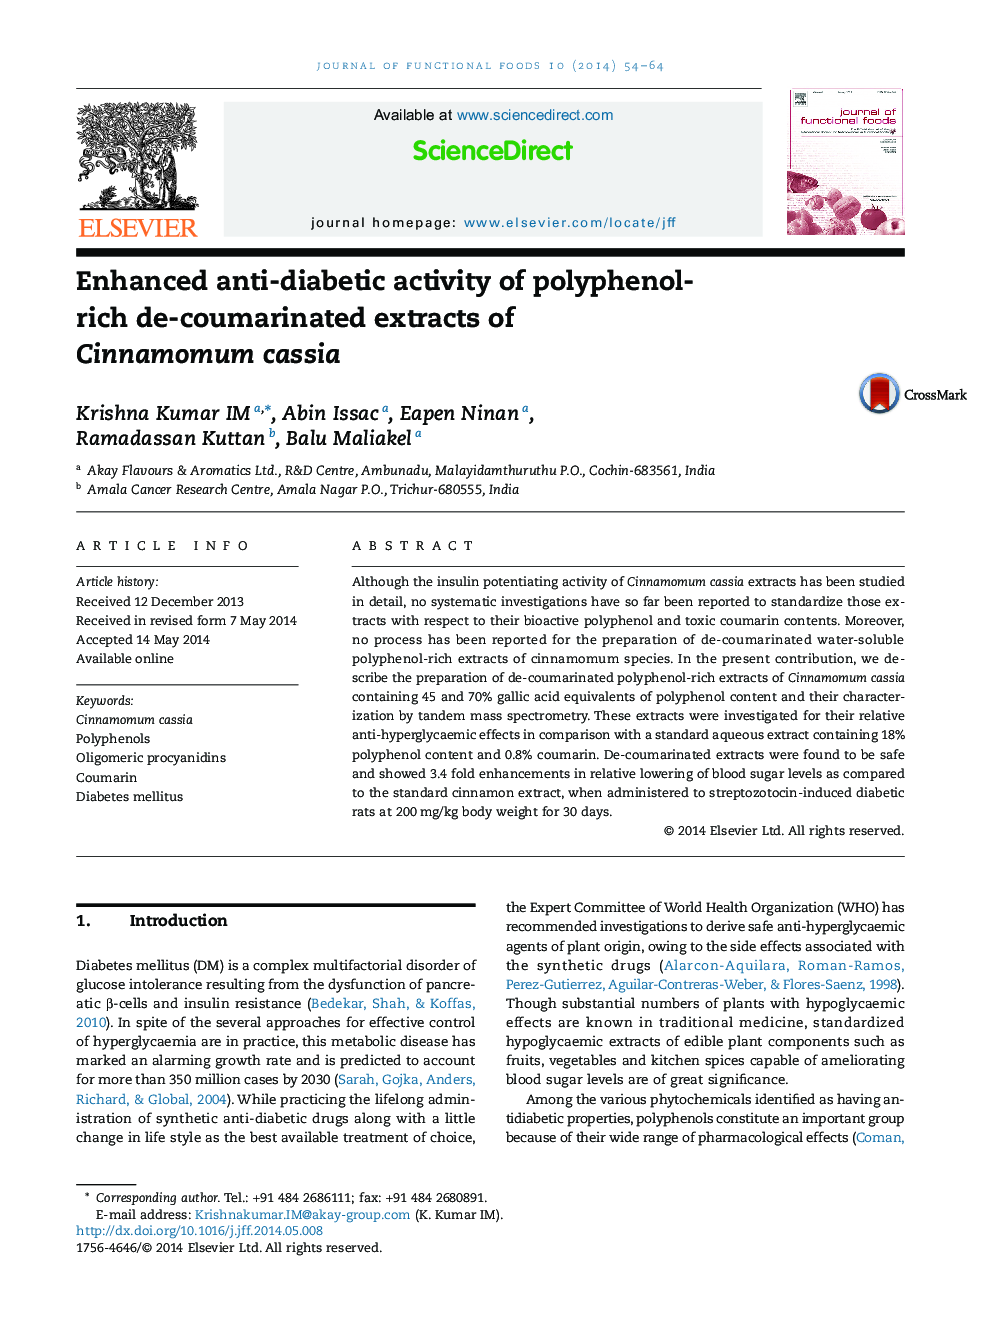 Enhanced anti-diabetic activity of polyphenol-rich de-coumarinated extracts of Cinnamomum cassia